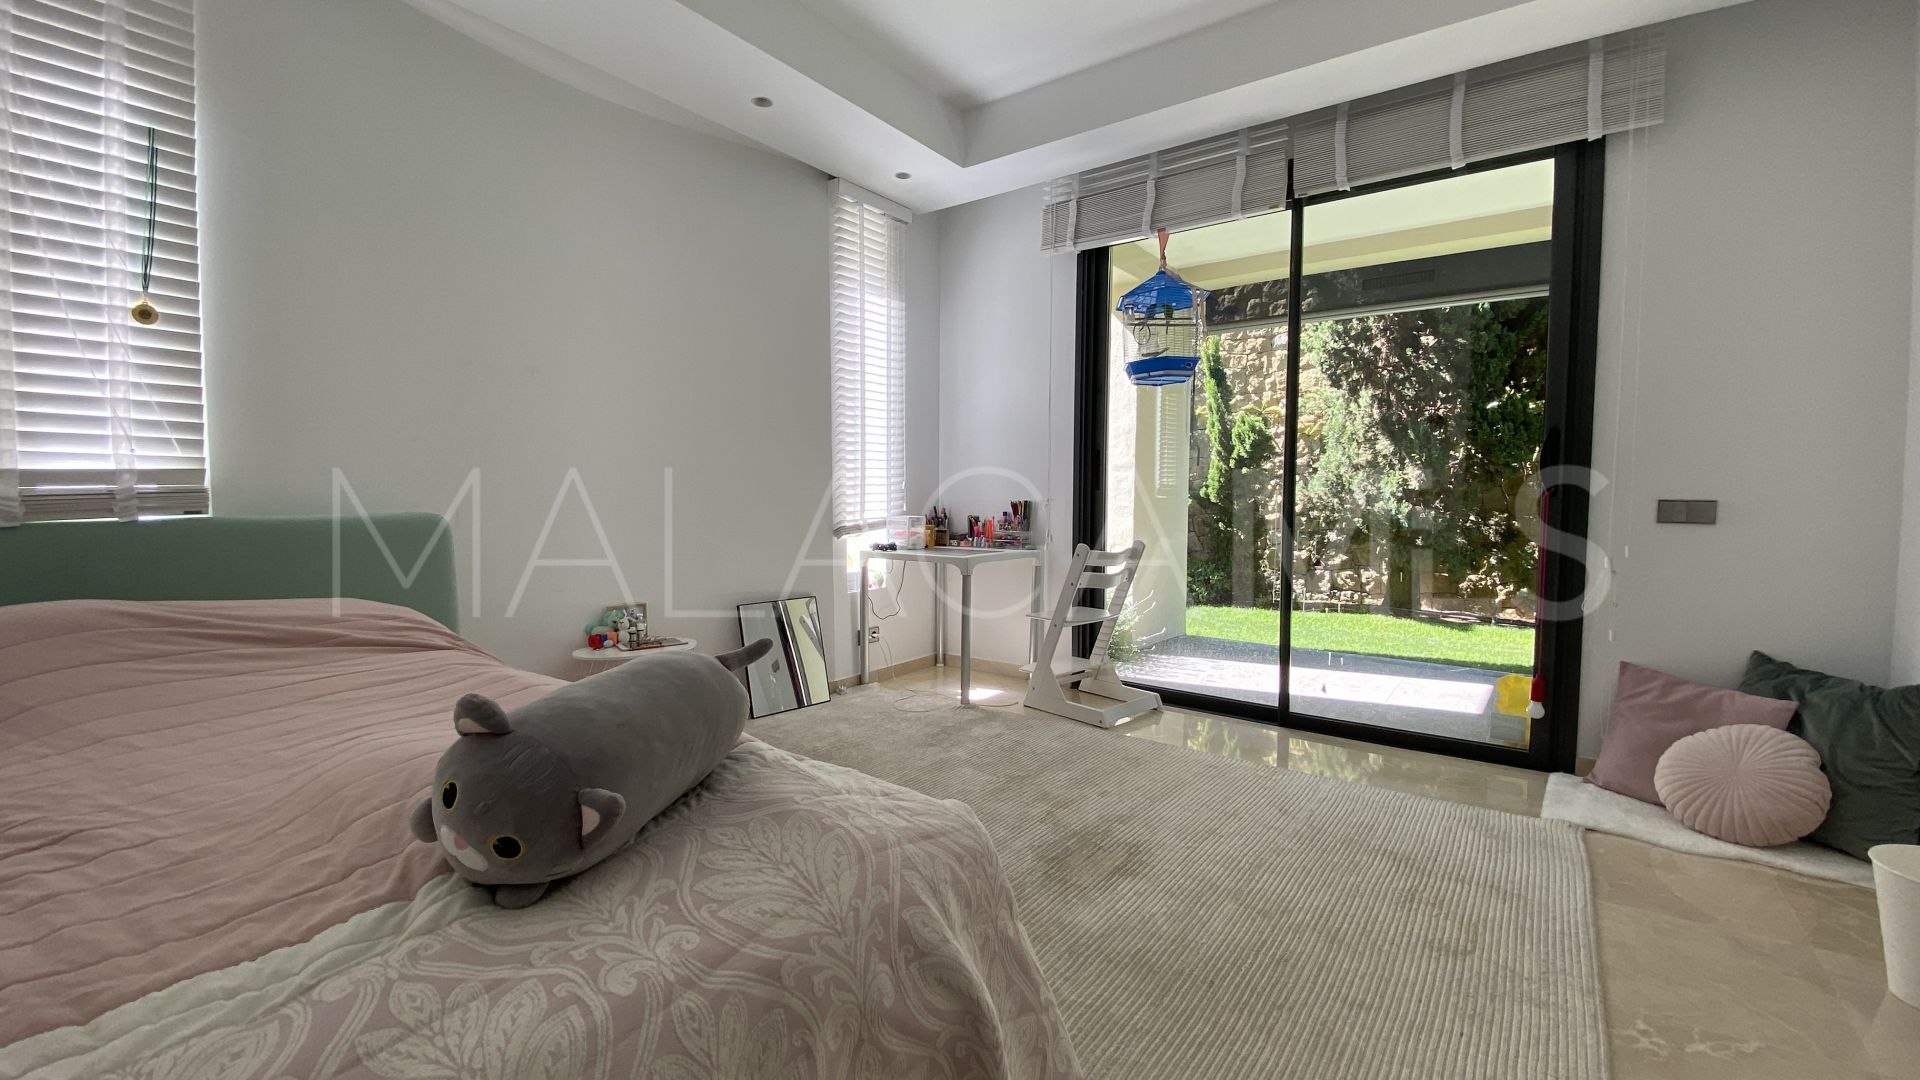 Imara 3 bedrooms ground floor apartment for sale